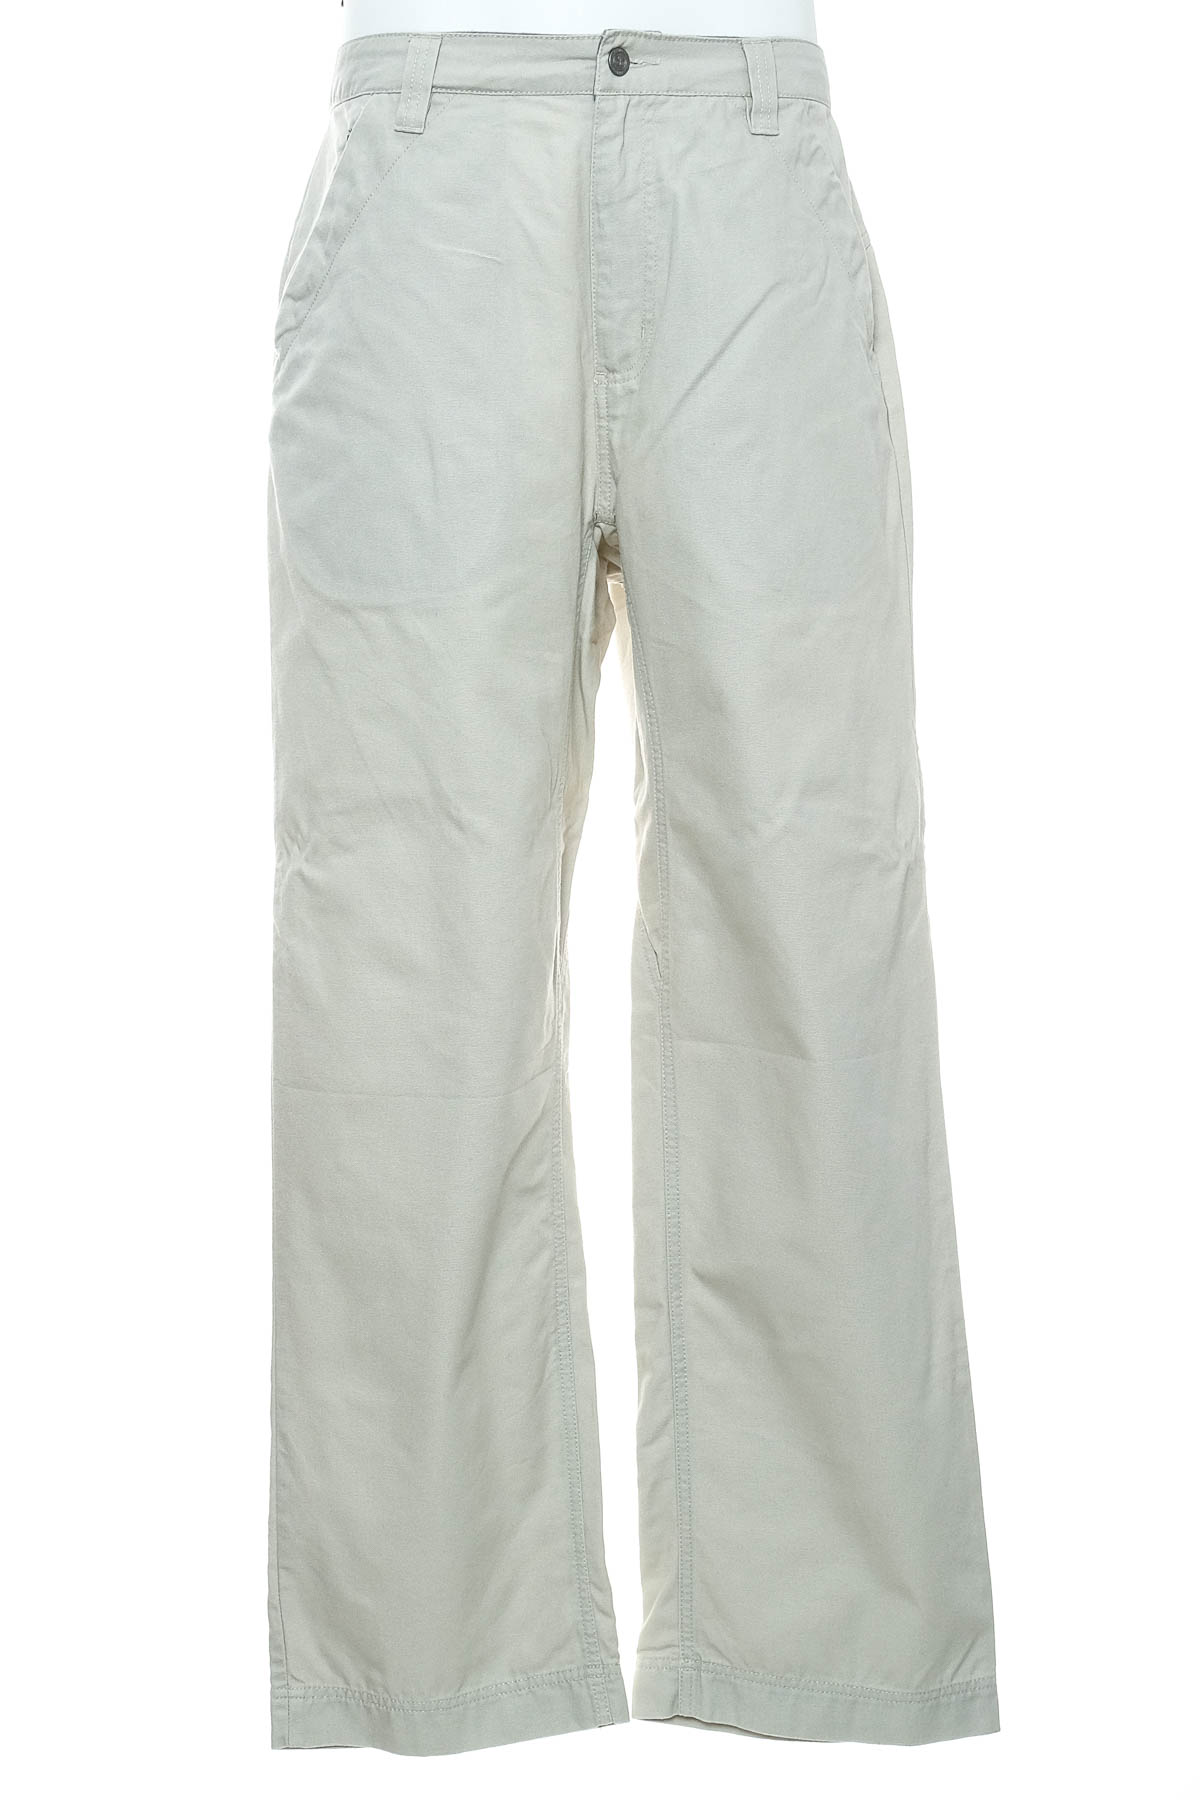 Pantalon pentru bărbați - Timberland - 0